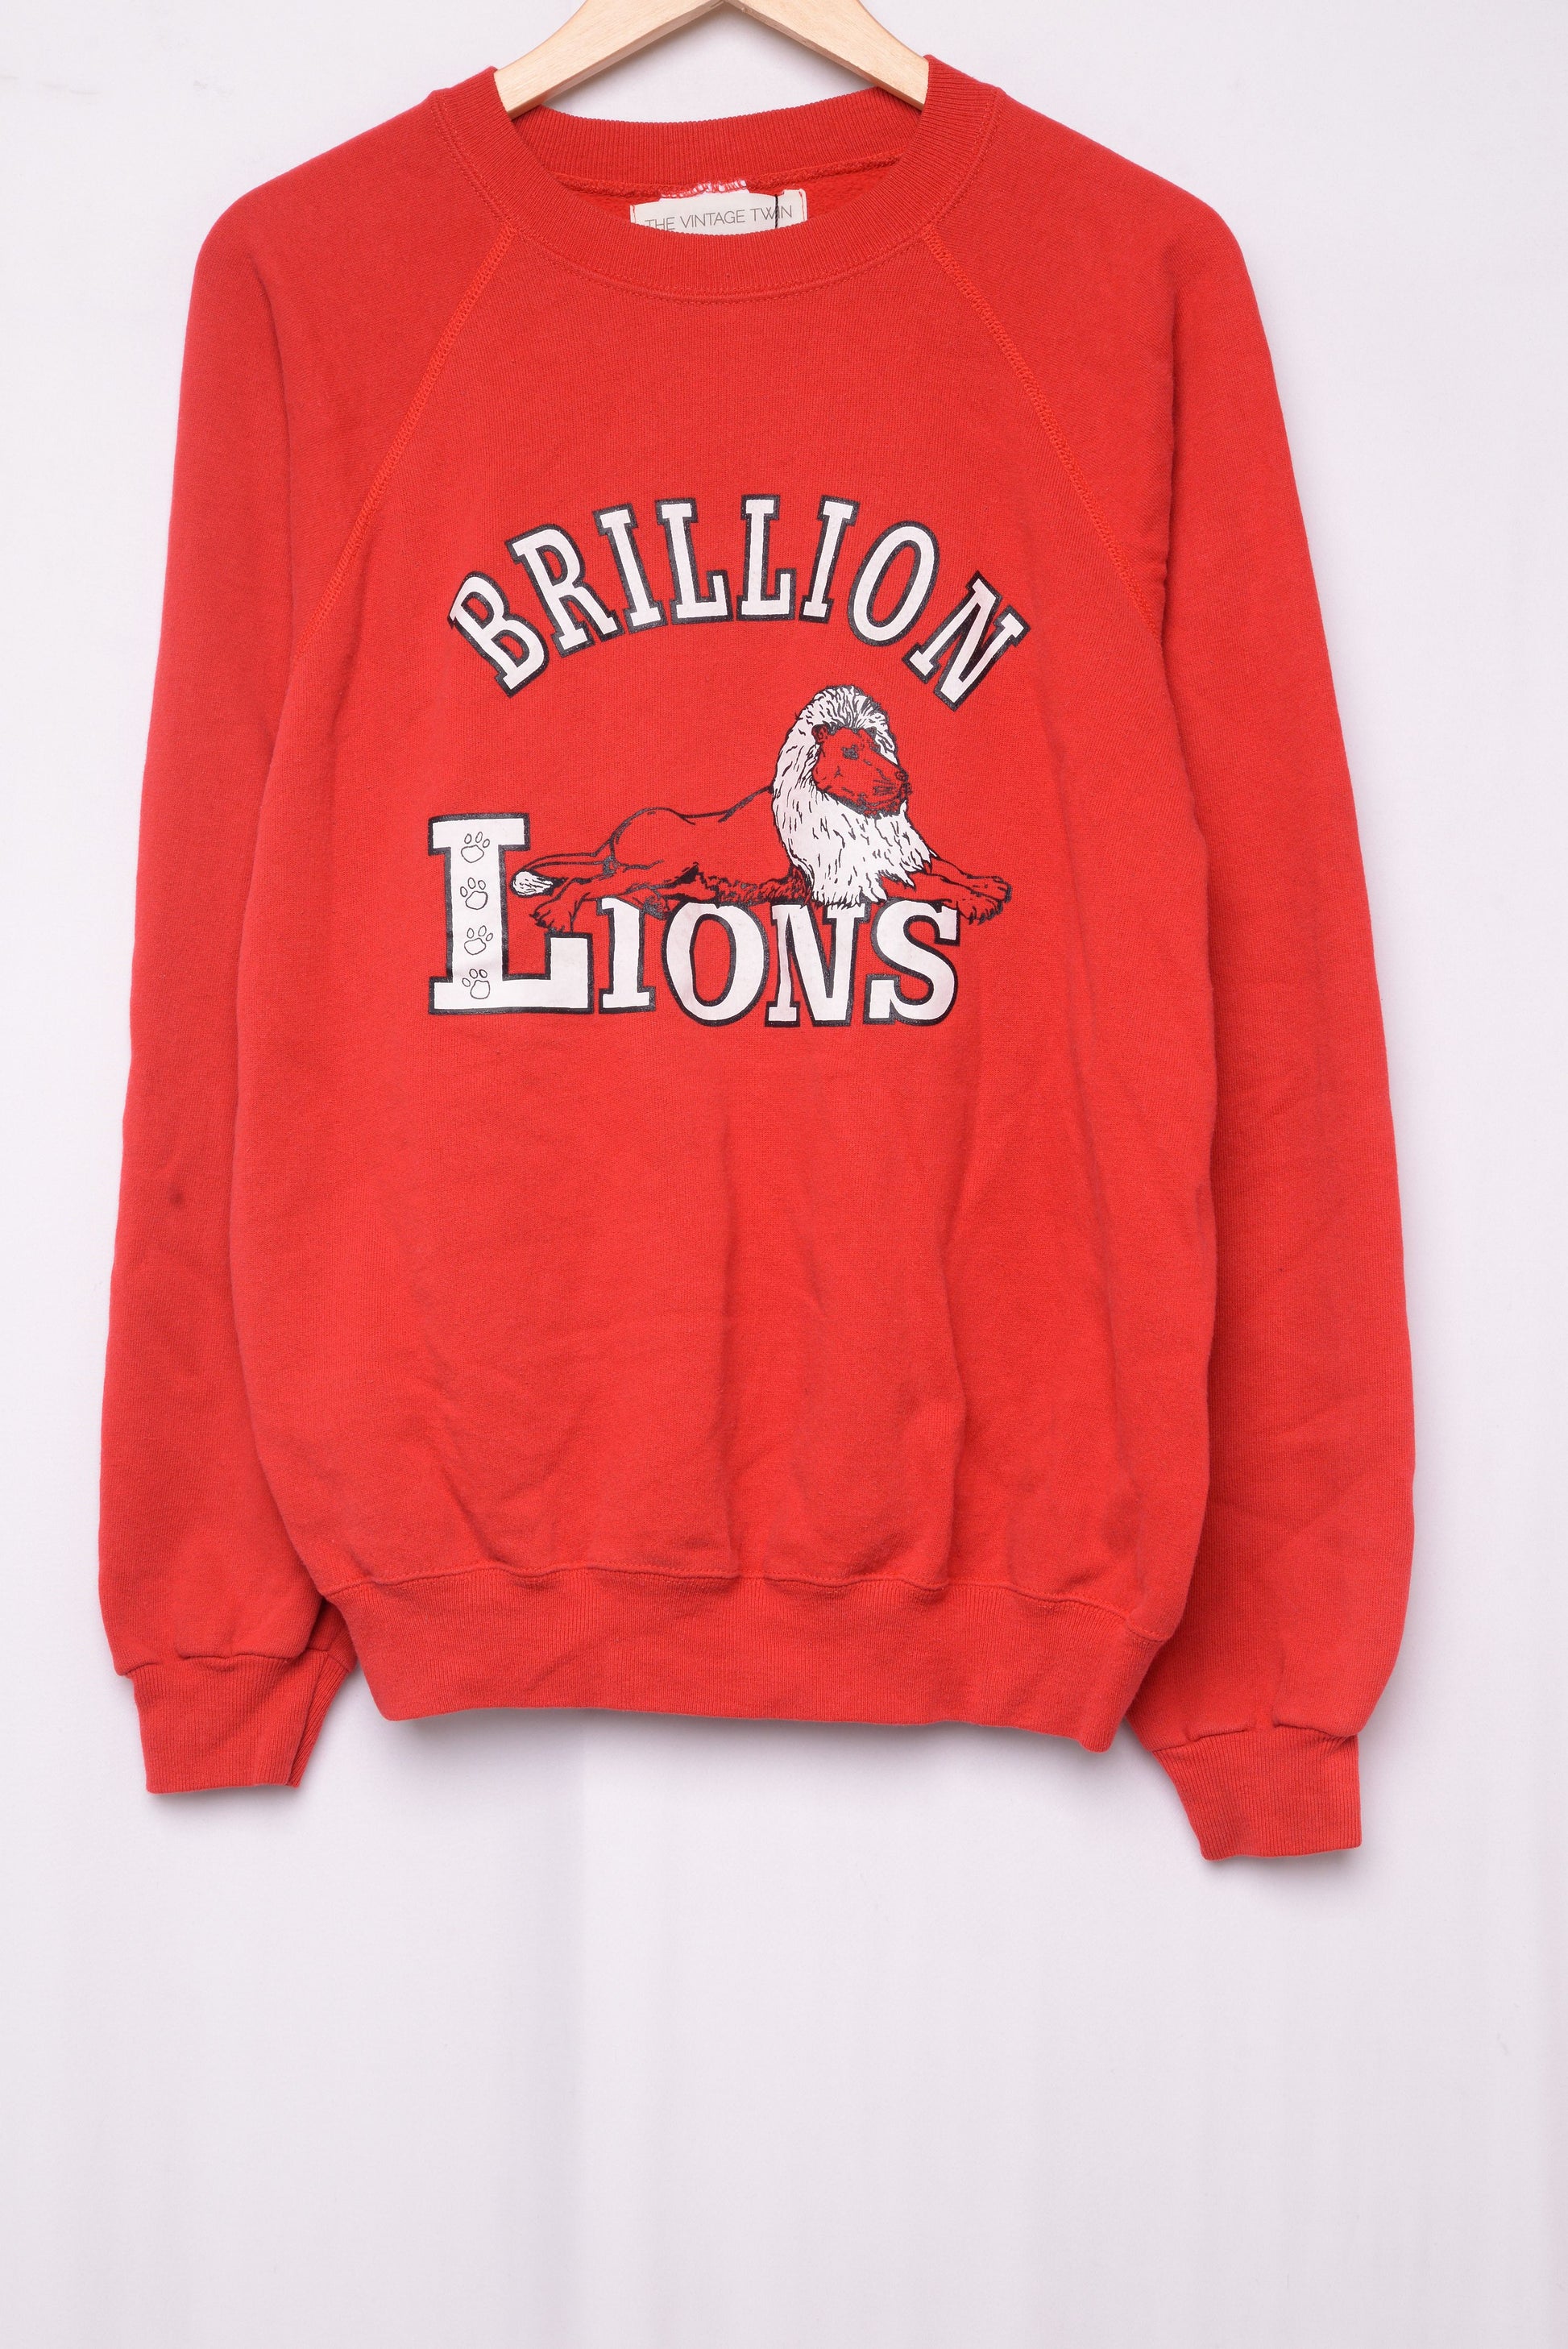 Brillion Lions Sweatshirt